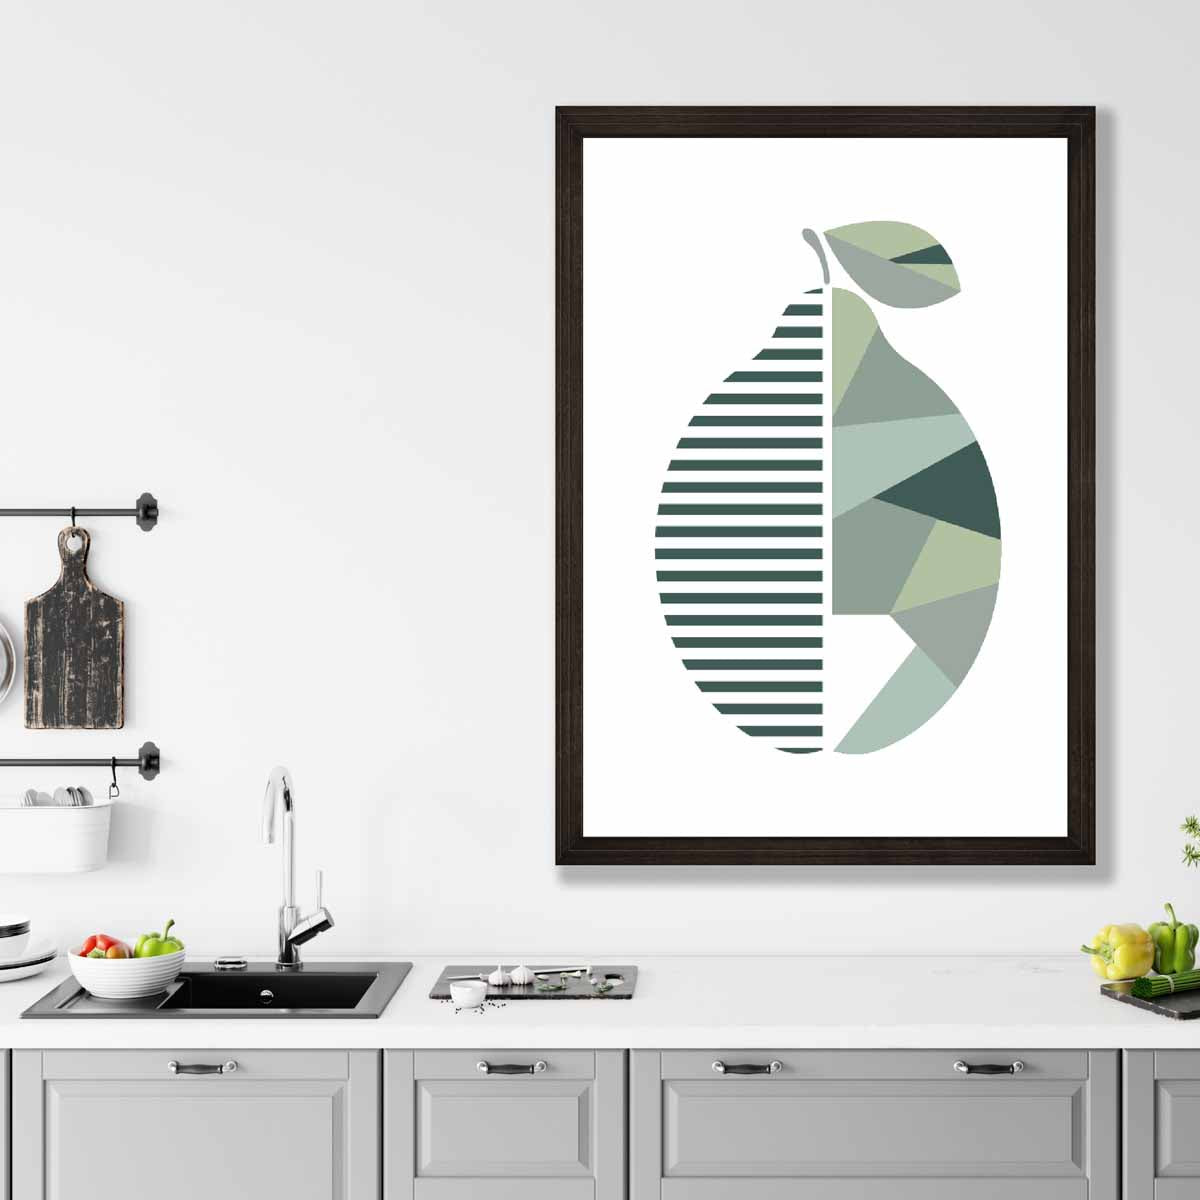 Geometric Fruit Poster of a Lemon in Sage green